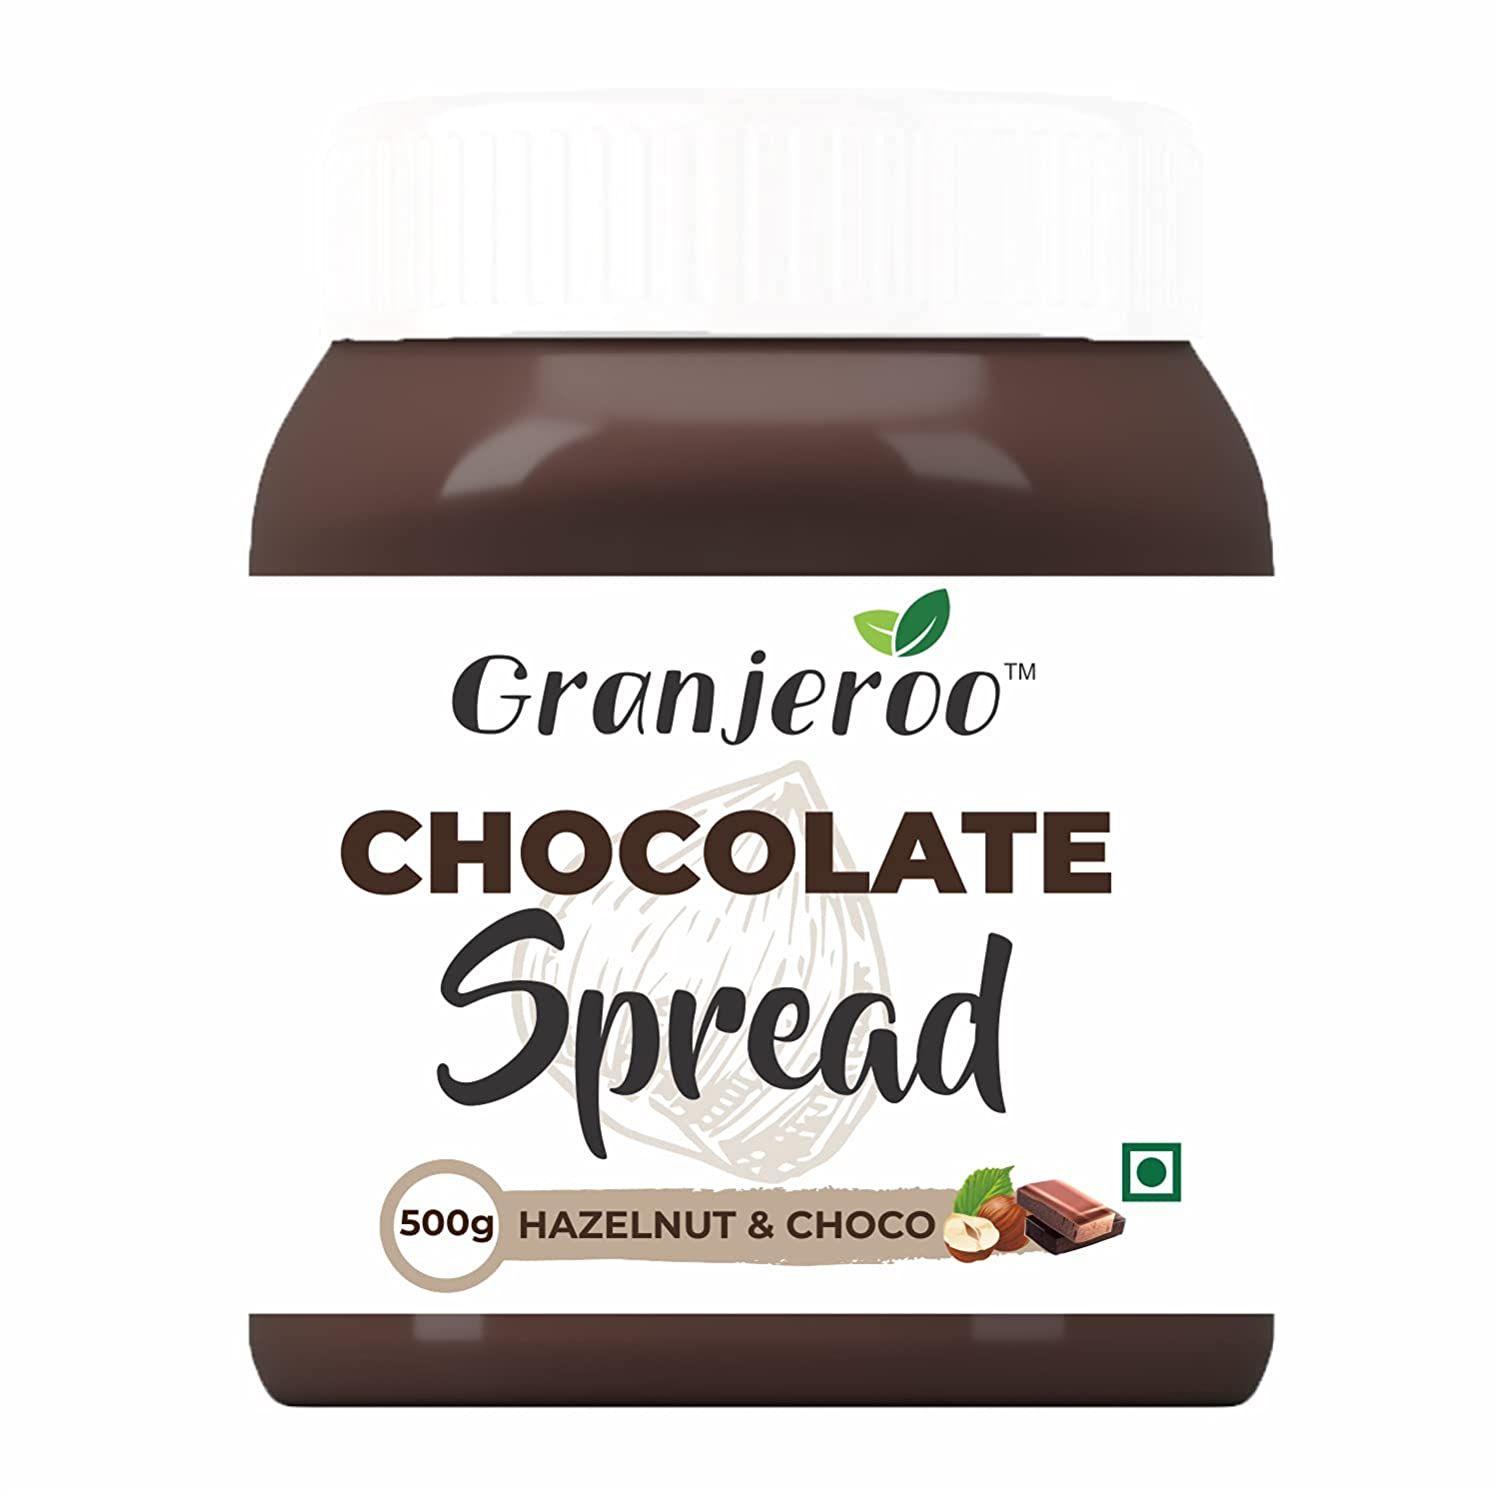 Granjeroo Hazelnut Chocolate Spread Image